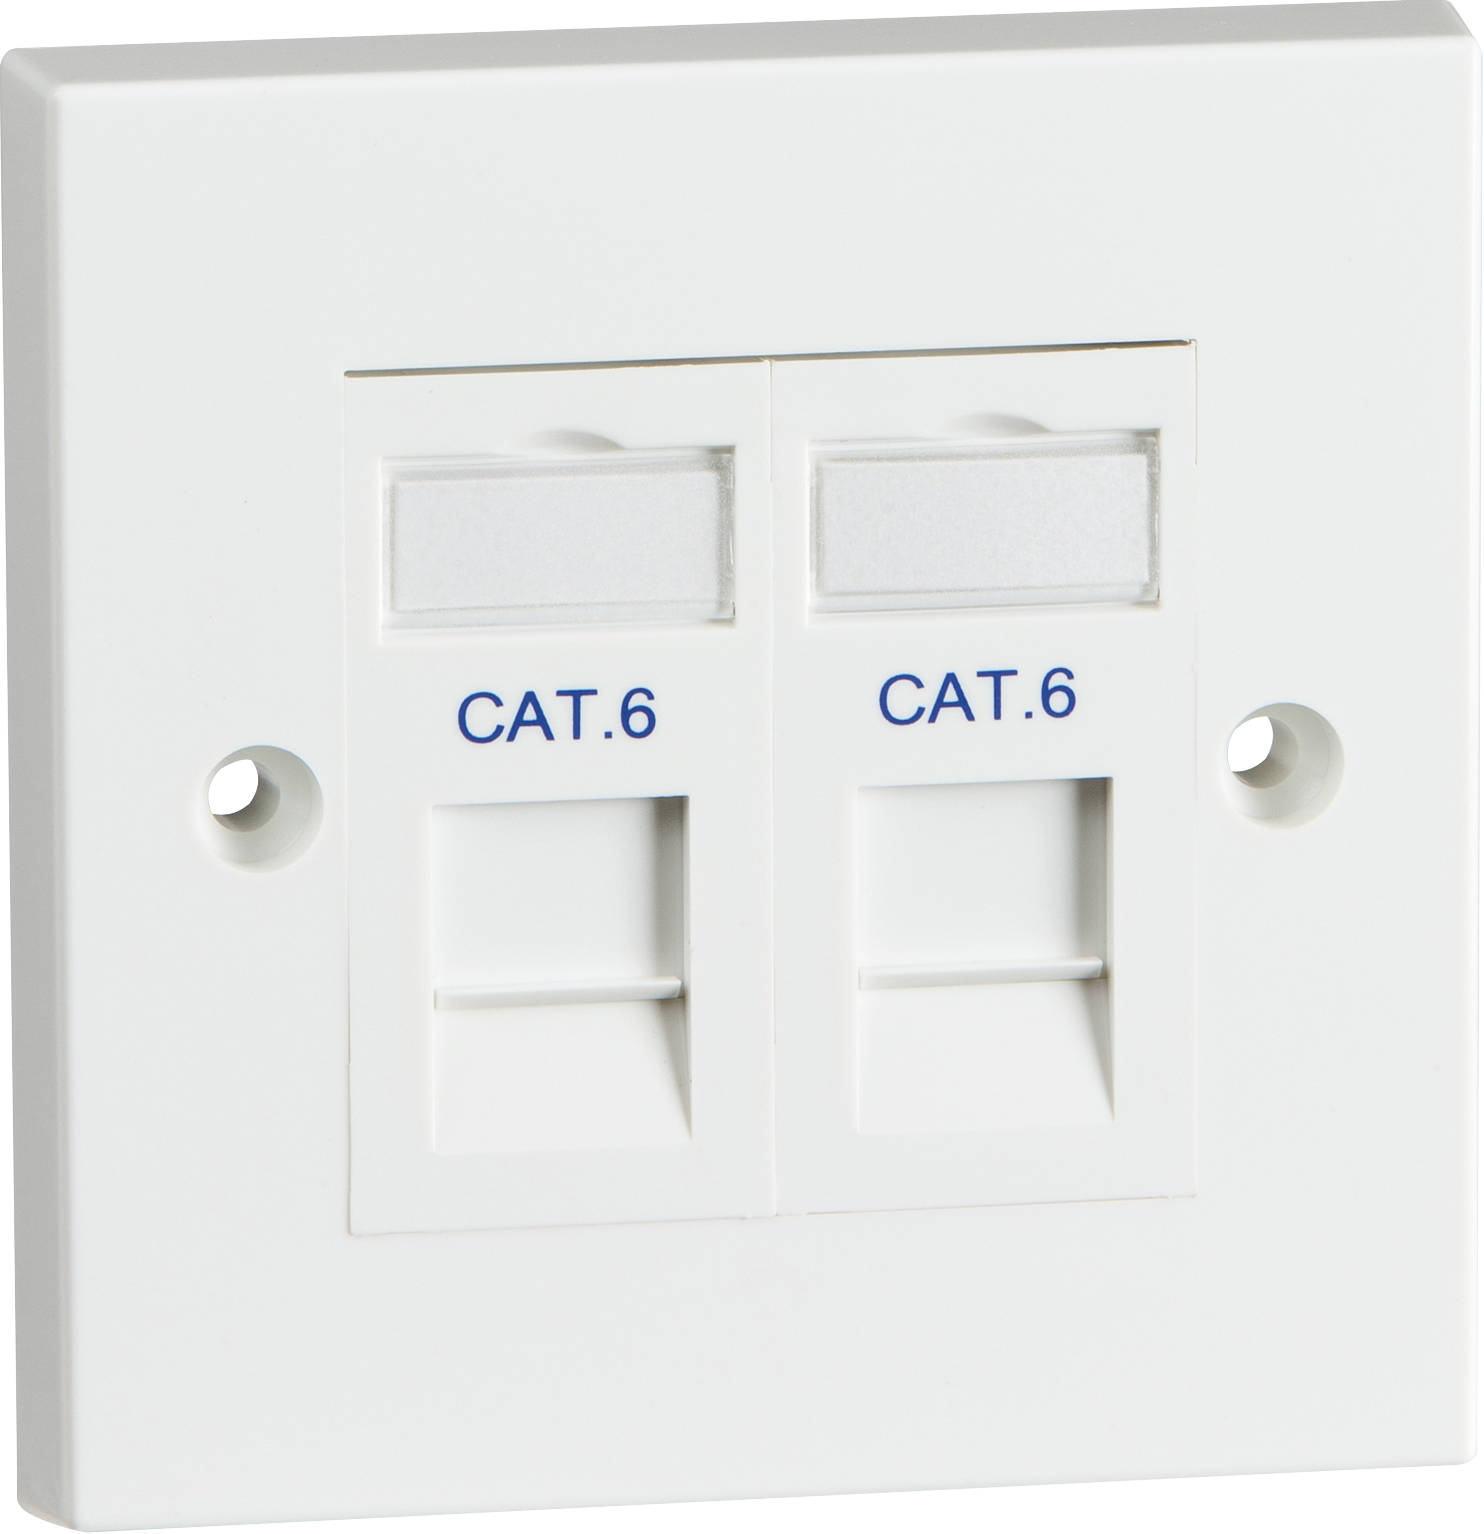 Twin Cat6 Outlet Kit - NET6KIT2 